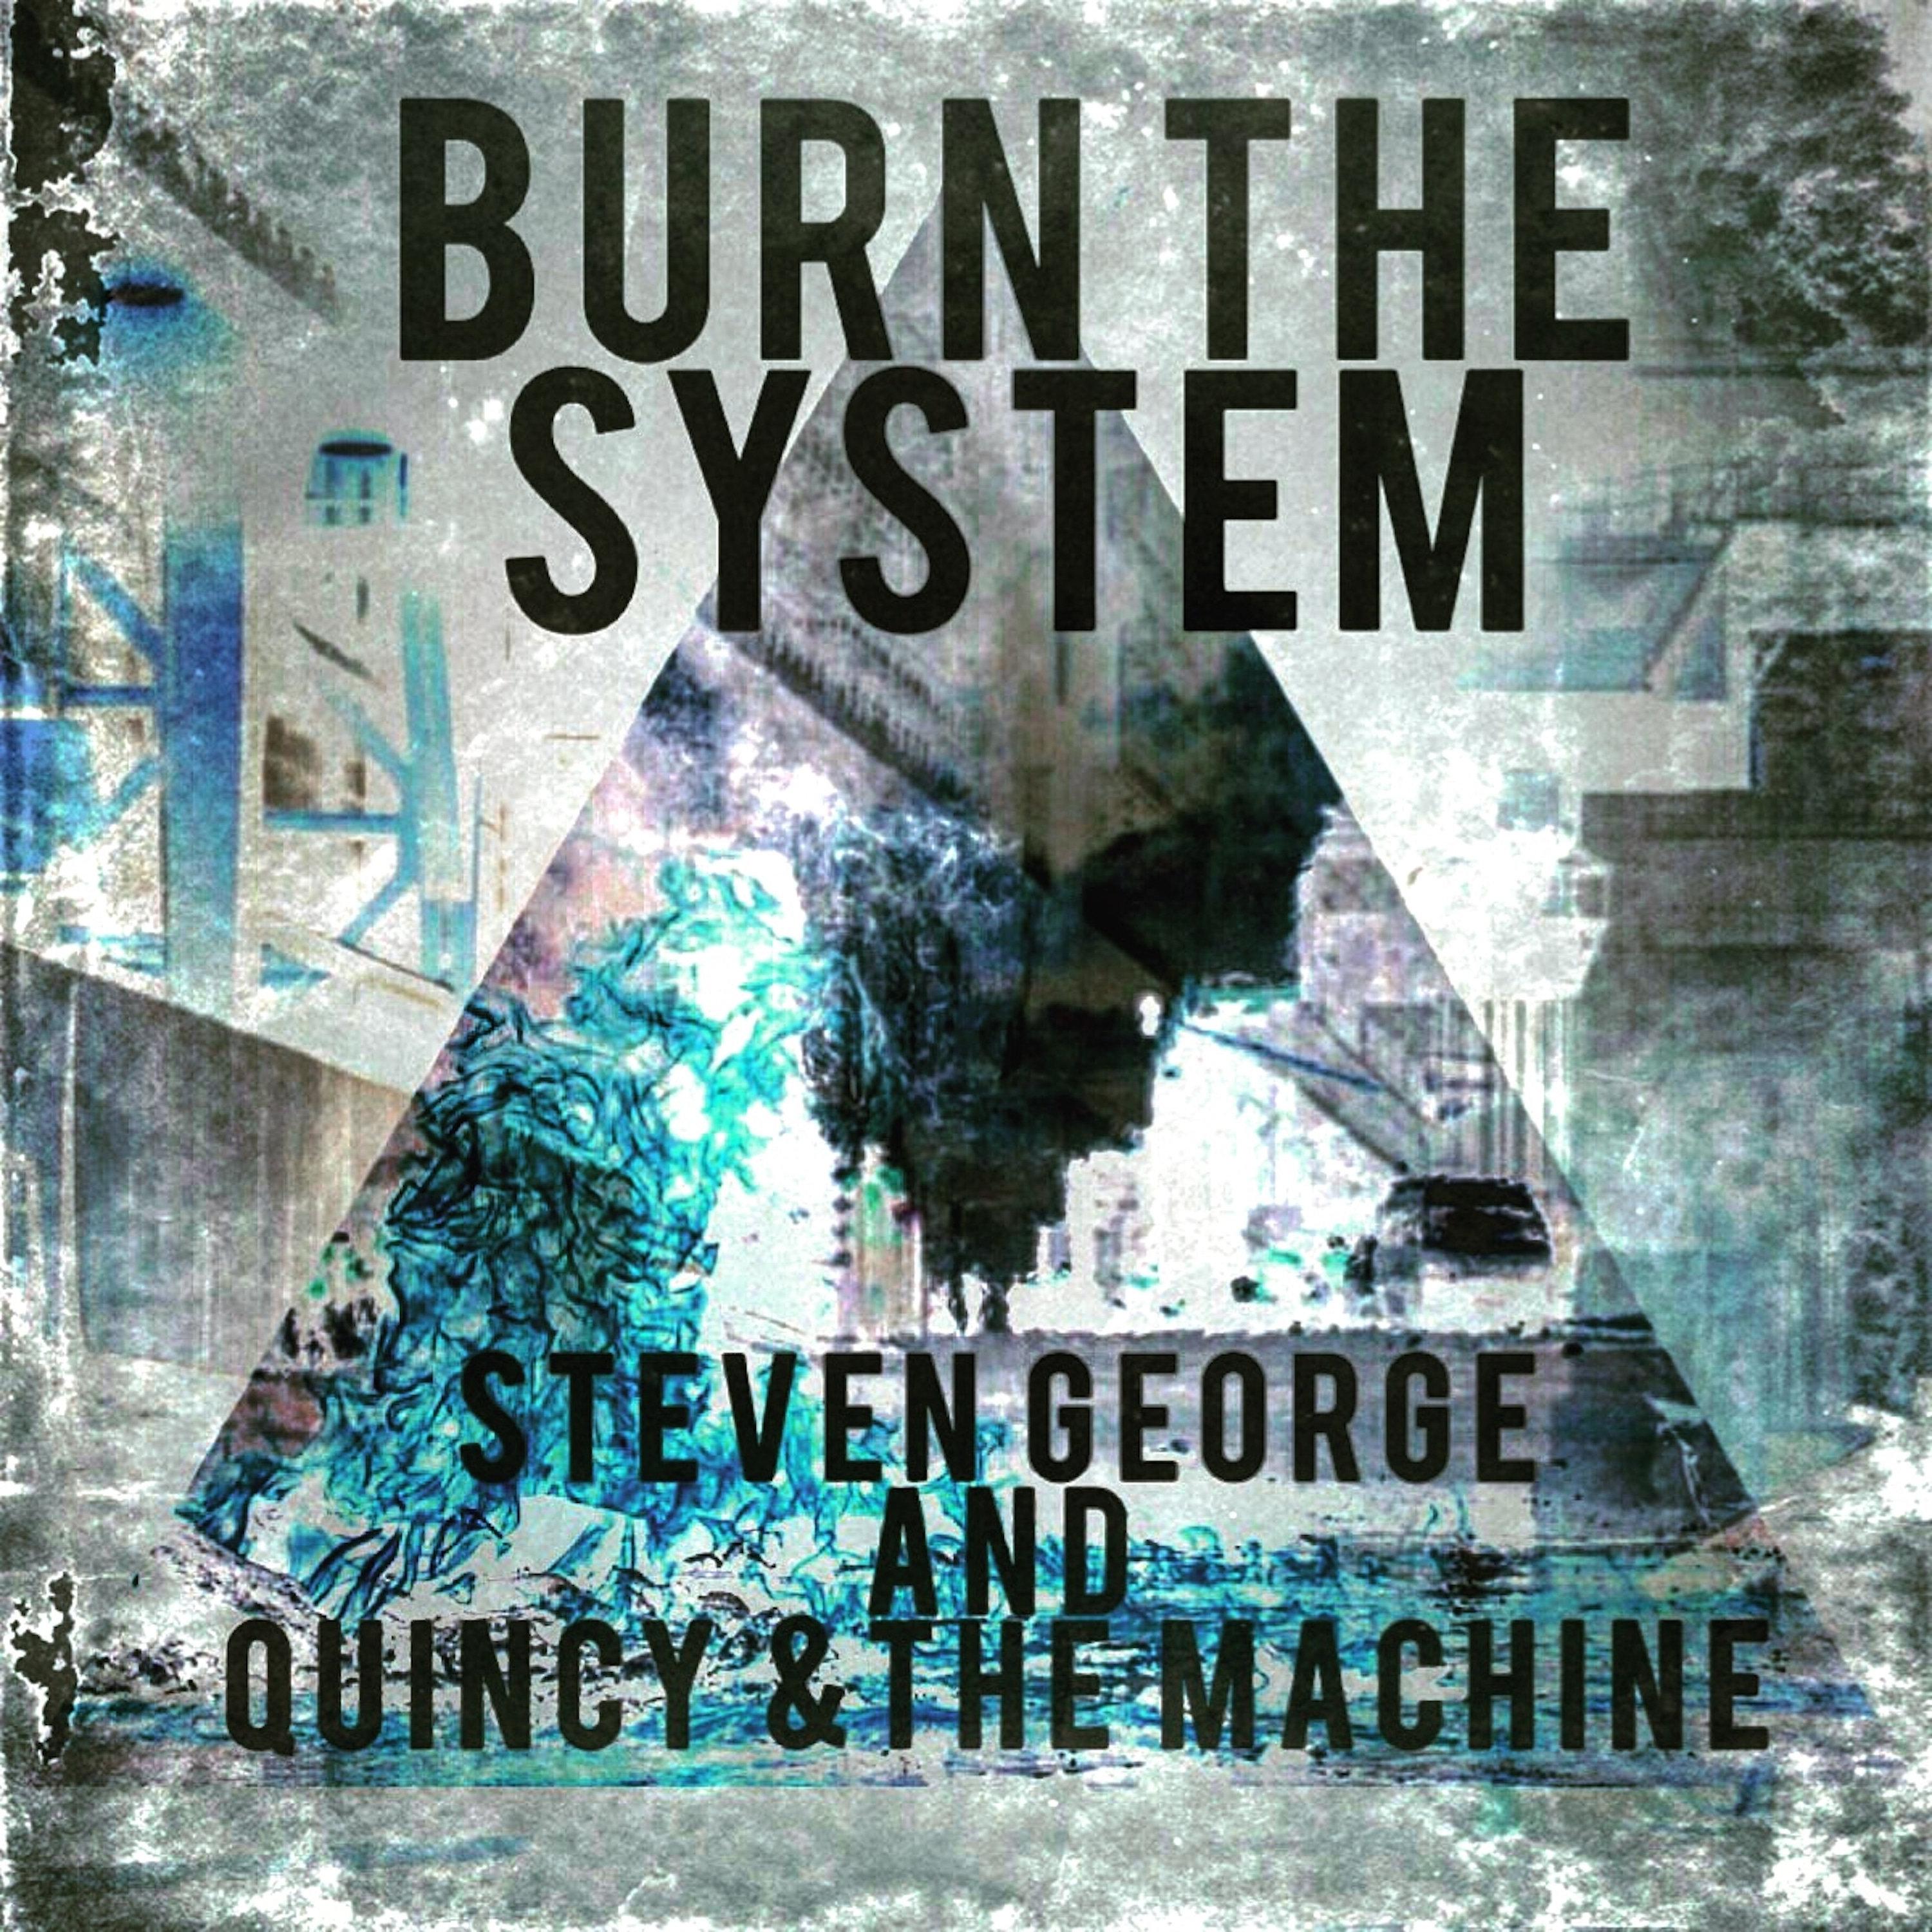 Steven George - Burn the System (SG Mix)